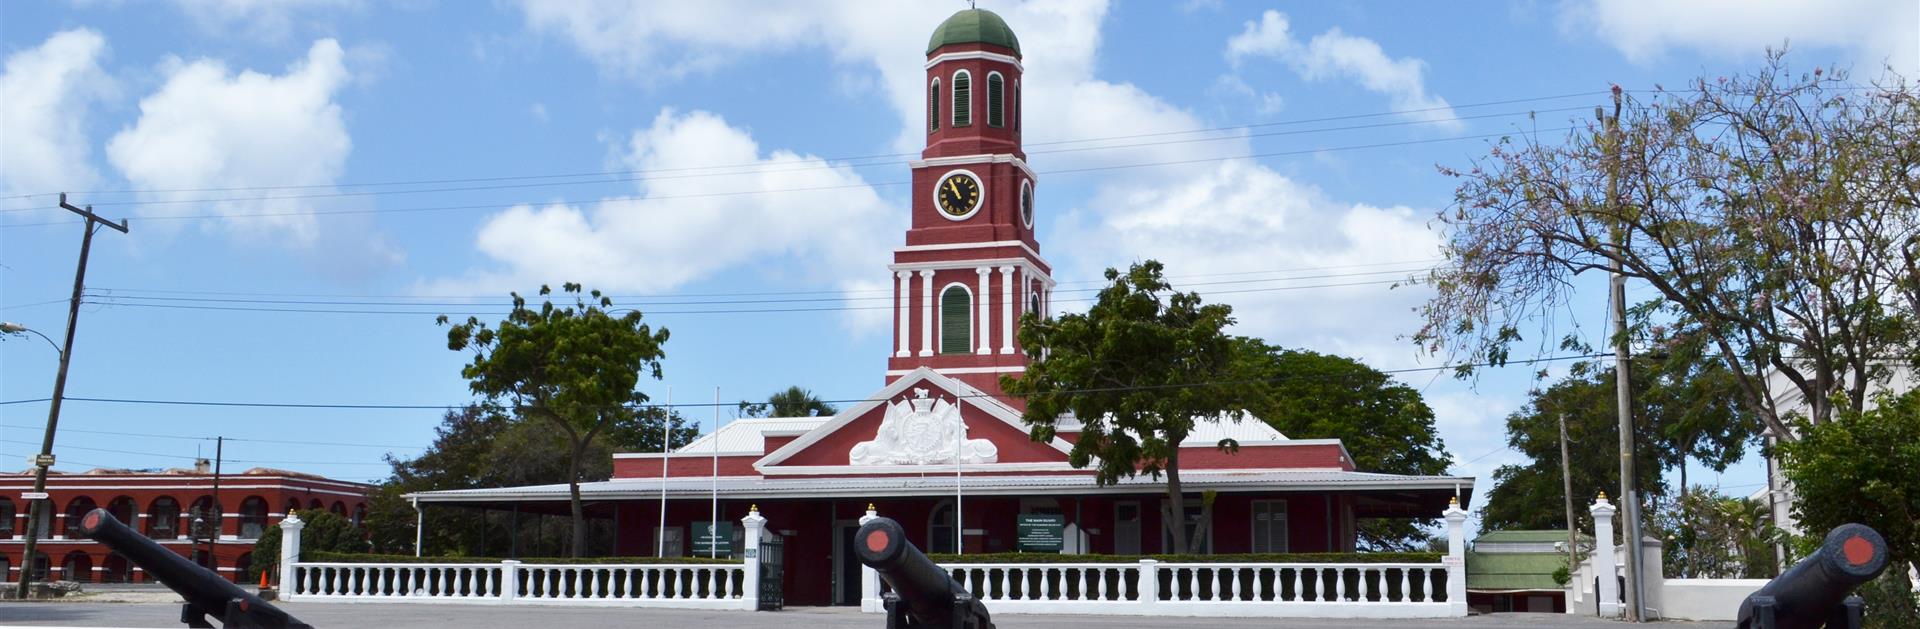 Historic Bridgetown and its Garrison - UNESCO World Heritage Centre